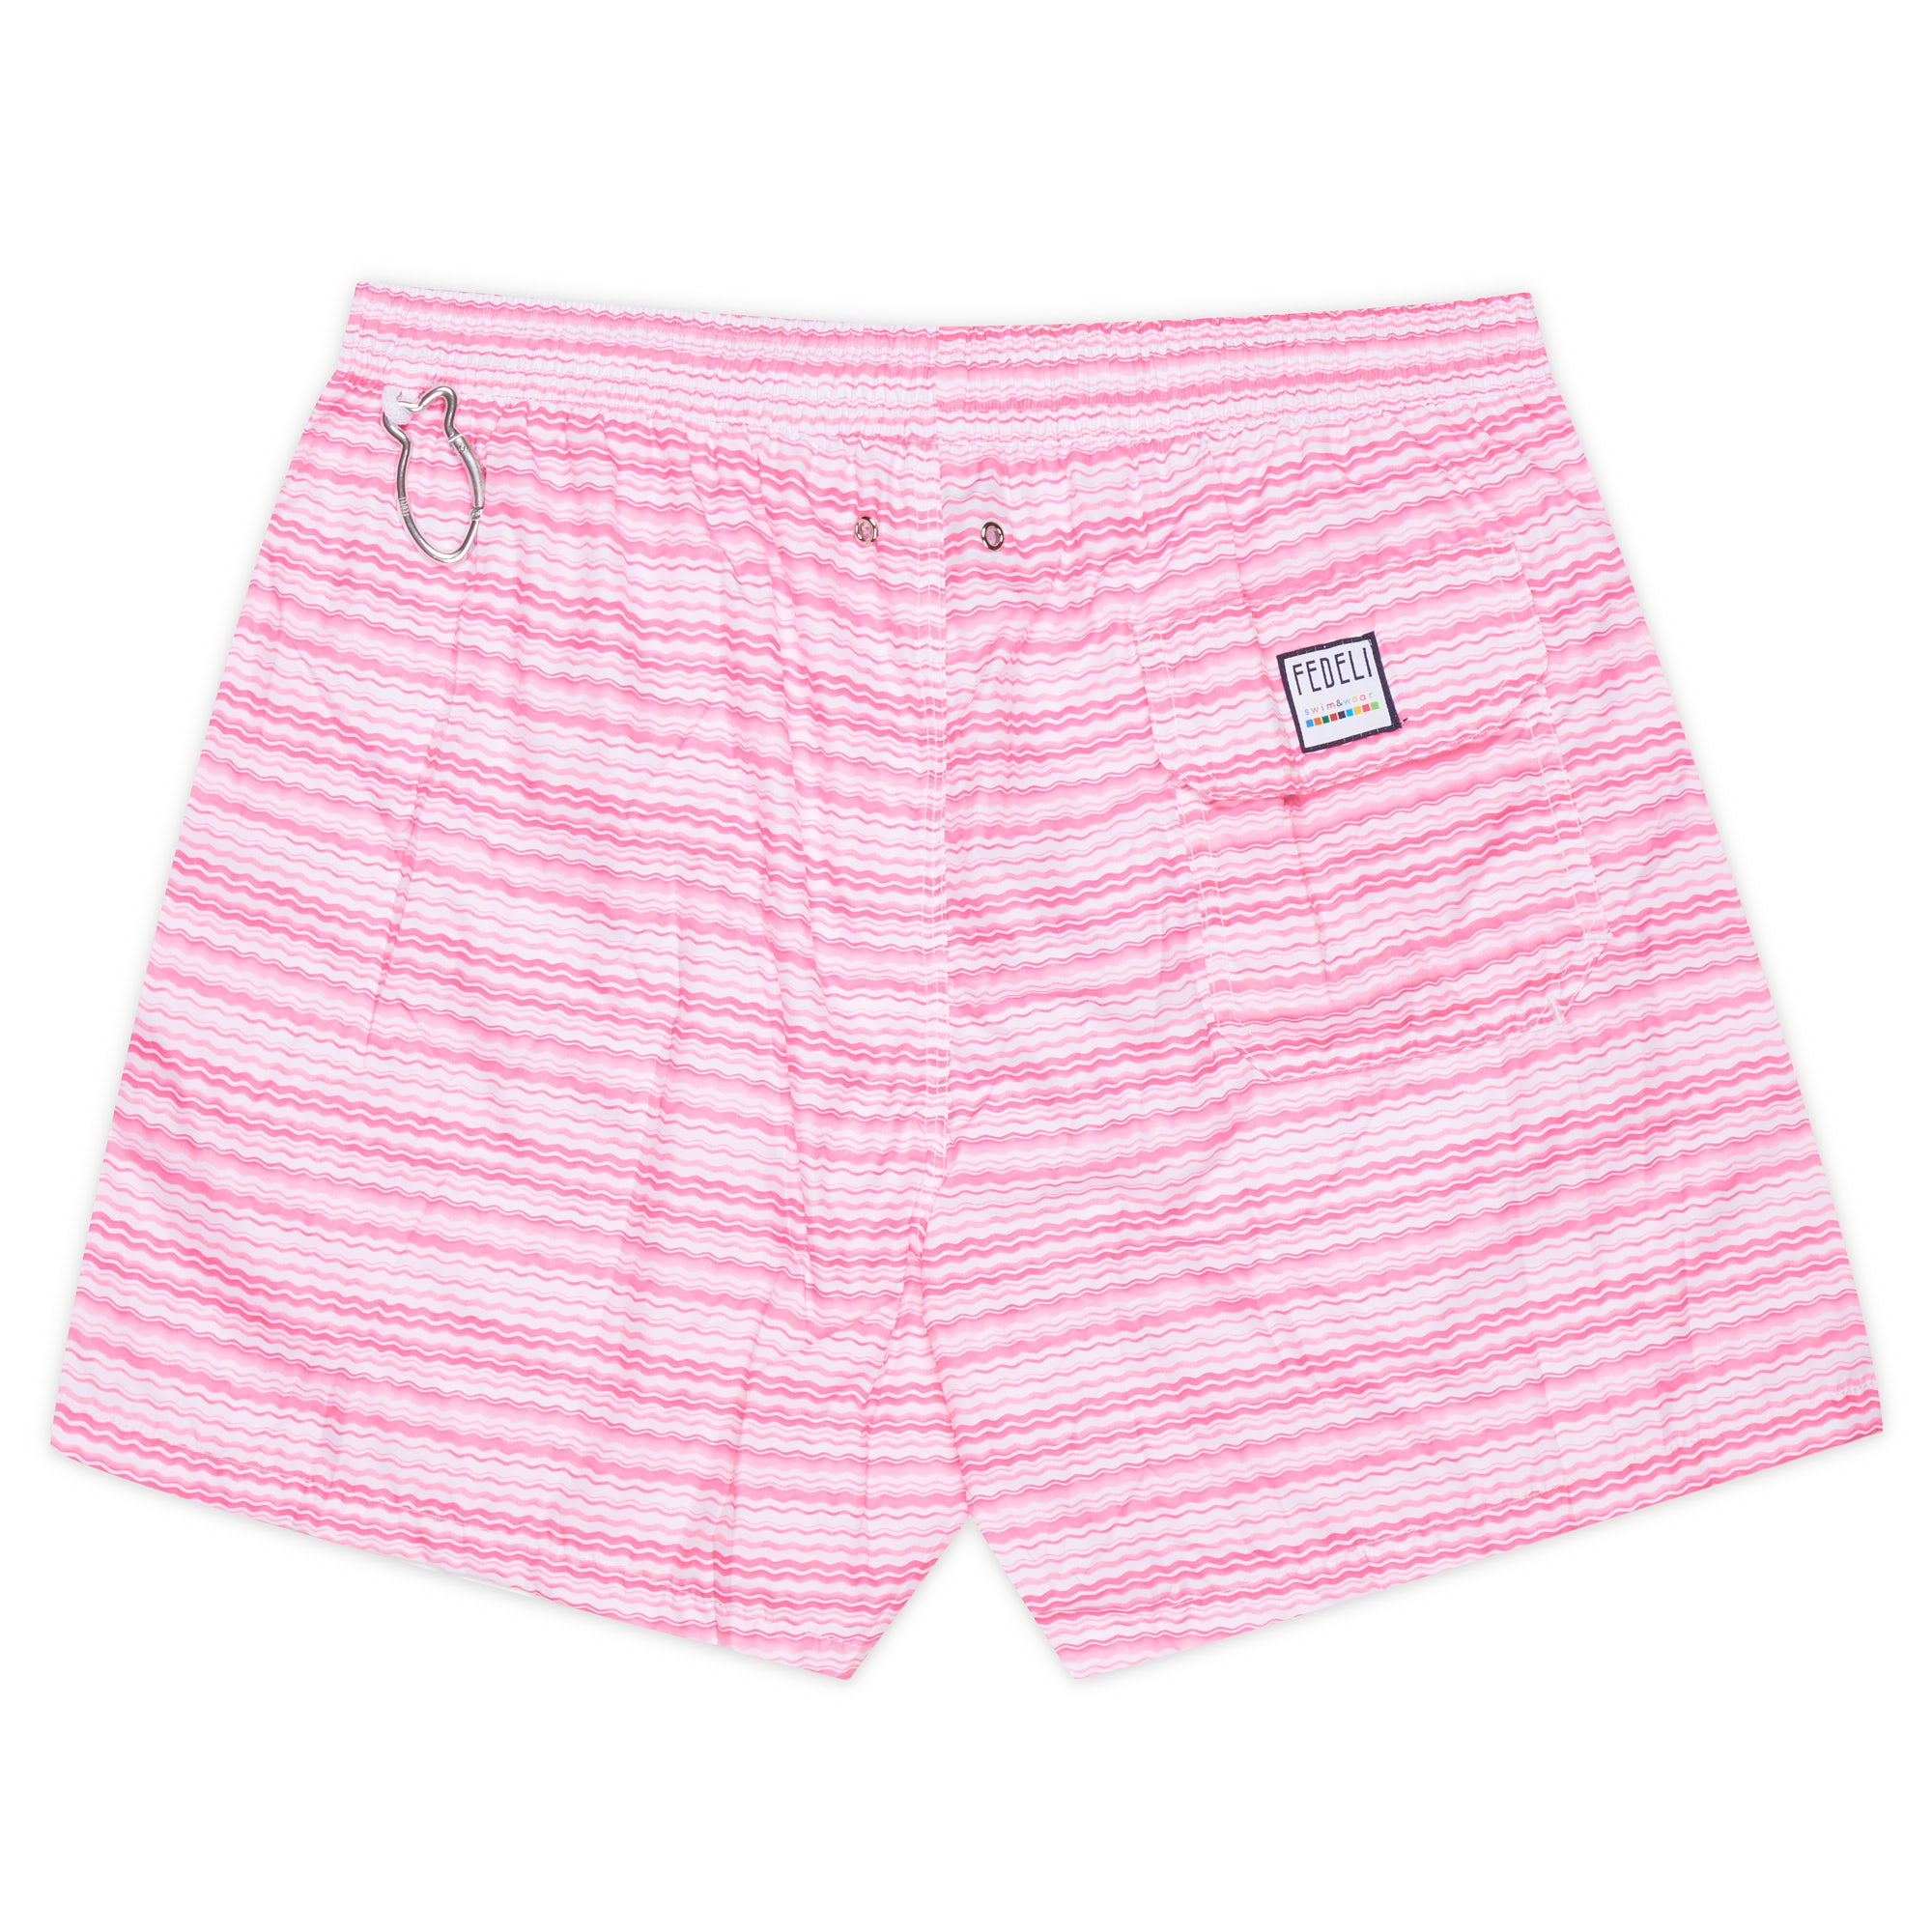 FEDELI Pink-White Wavy Striped Madeira Airstop Swim Shorts Trunks NEW FEDELI